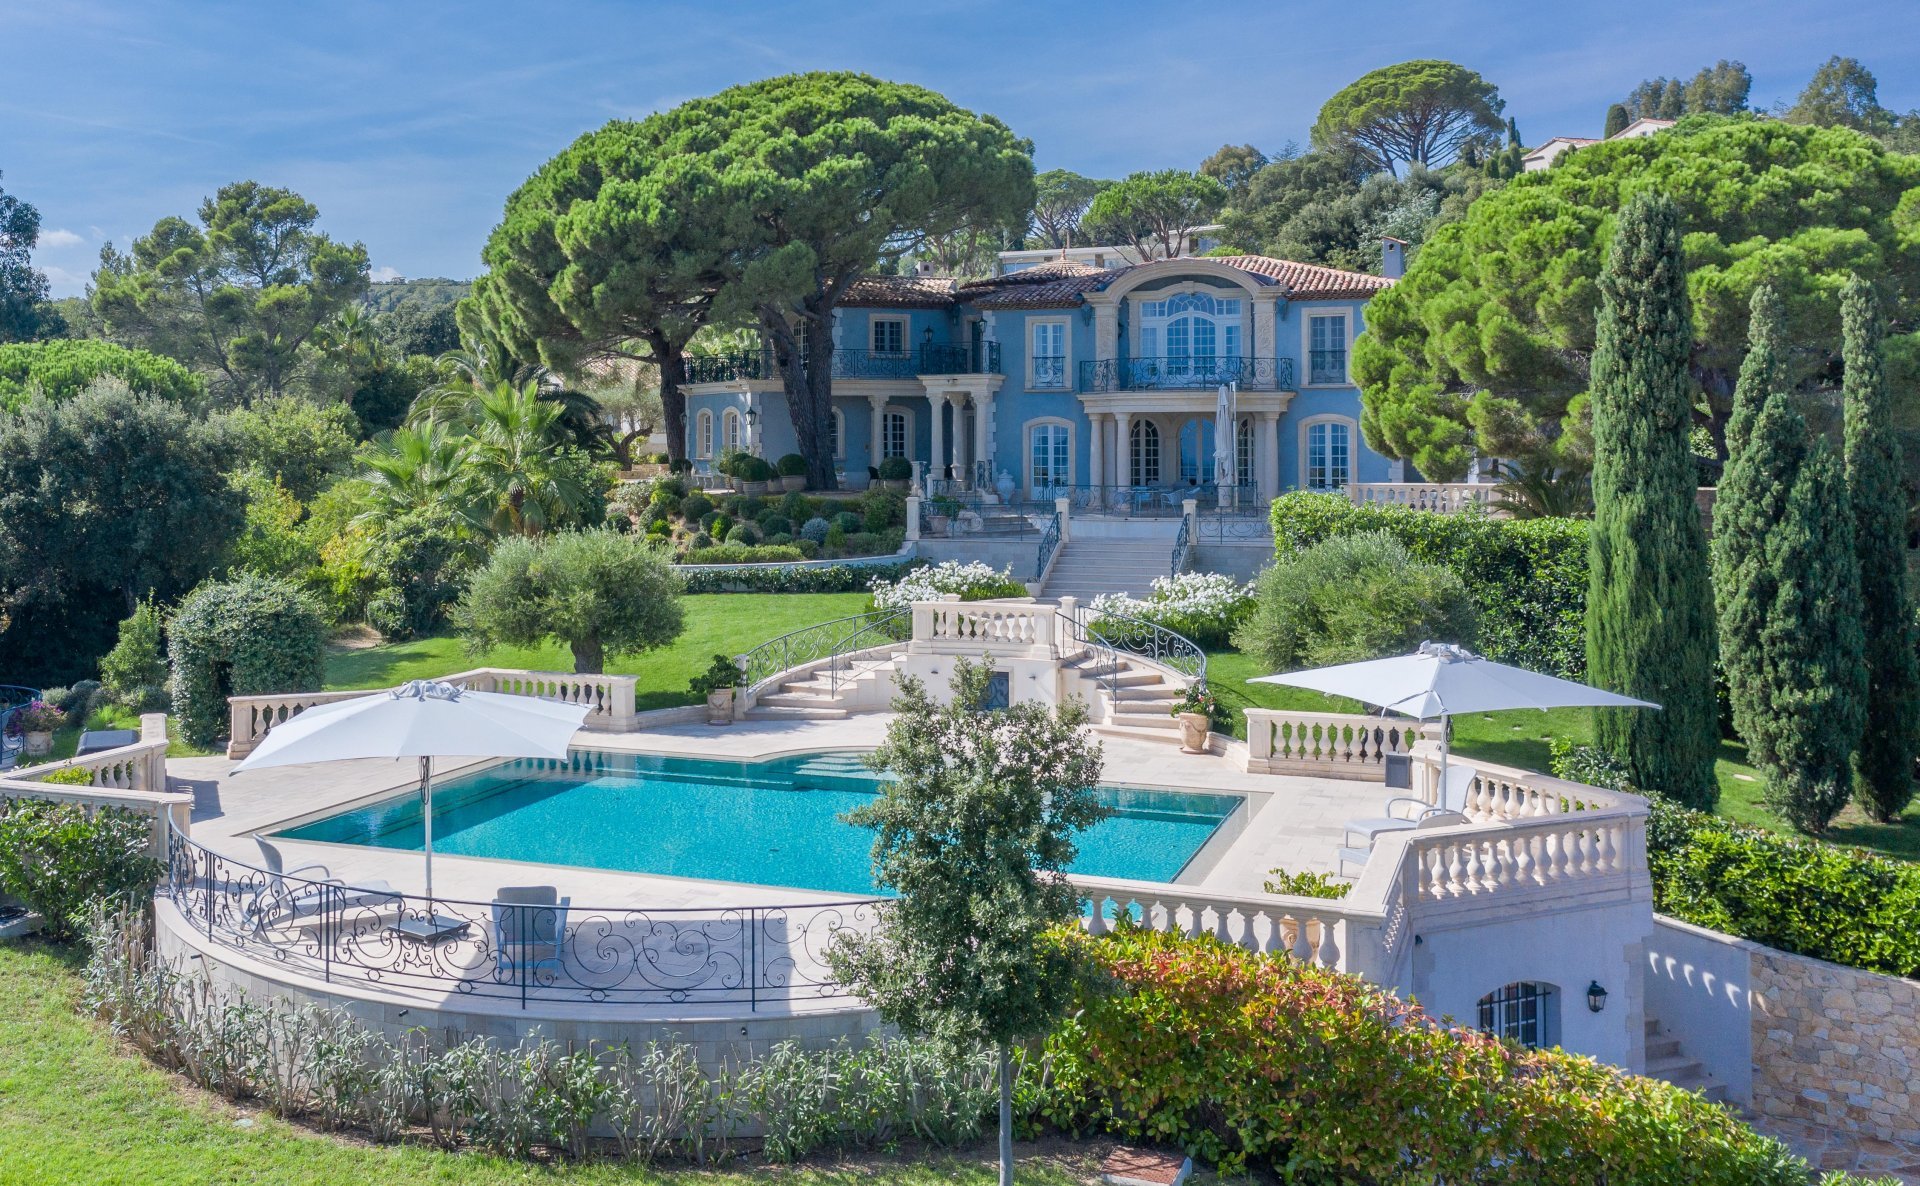 Iconic French Riviera Villa Overlooking the Bay of Saint Tropez | realestatemarket.us.com